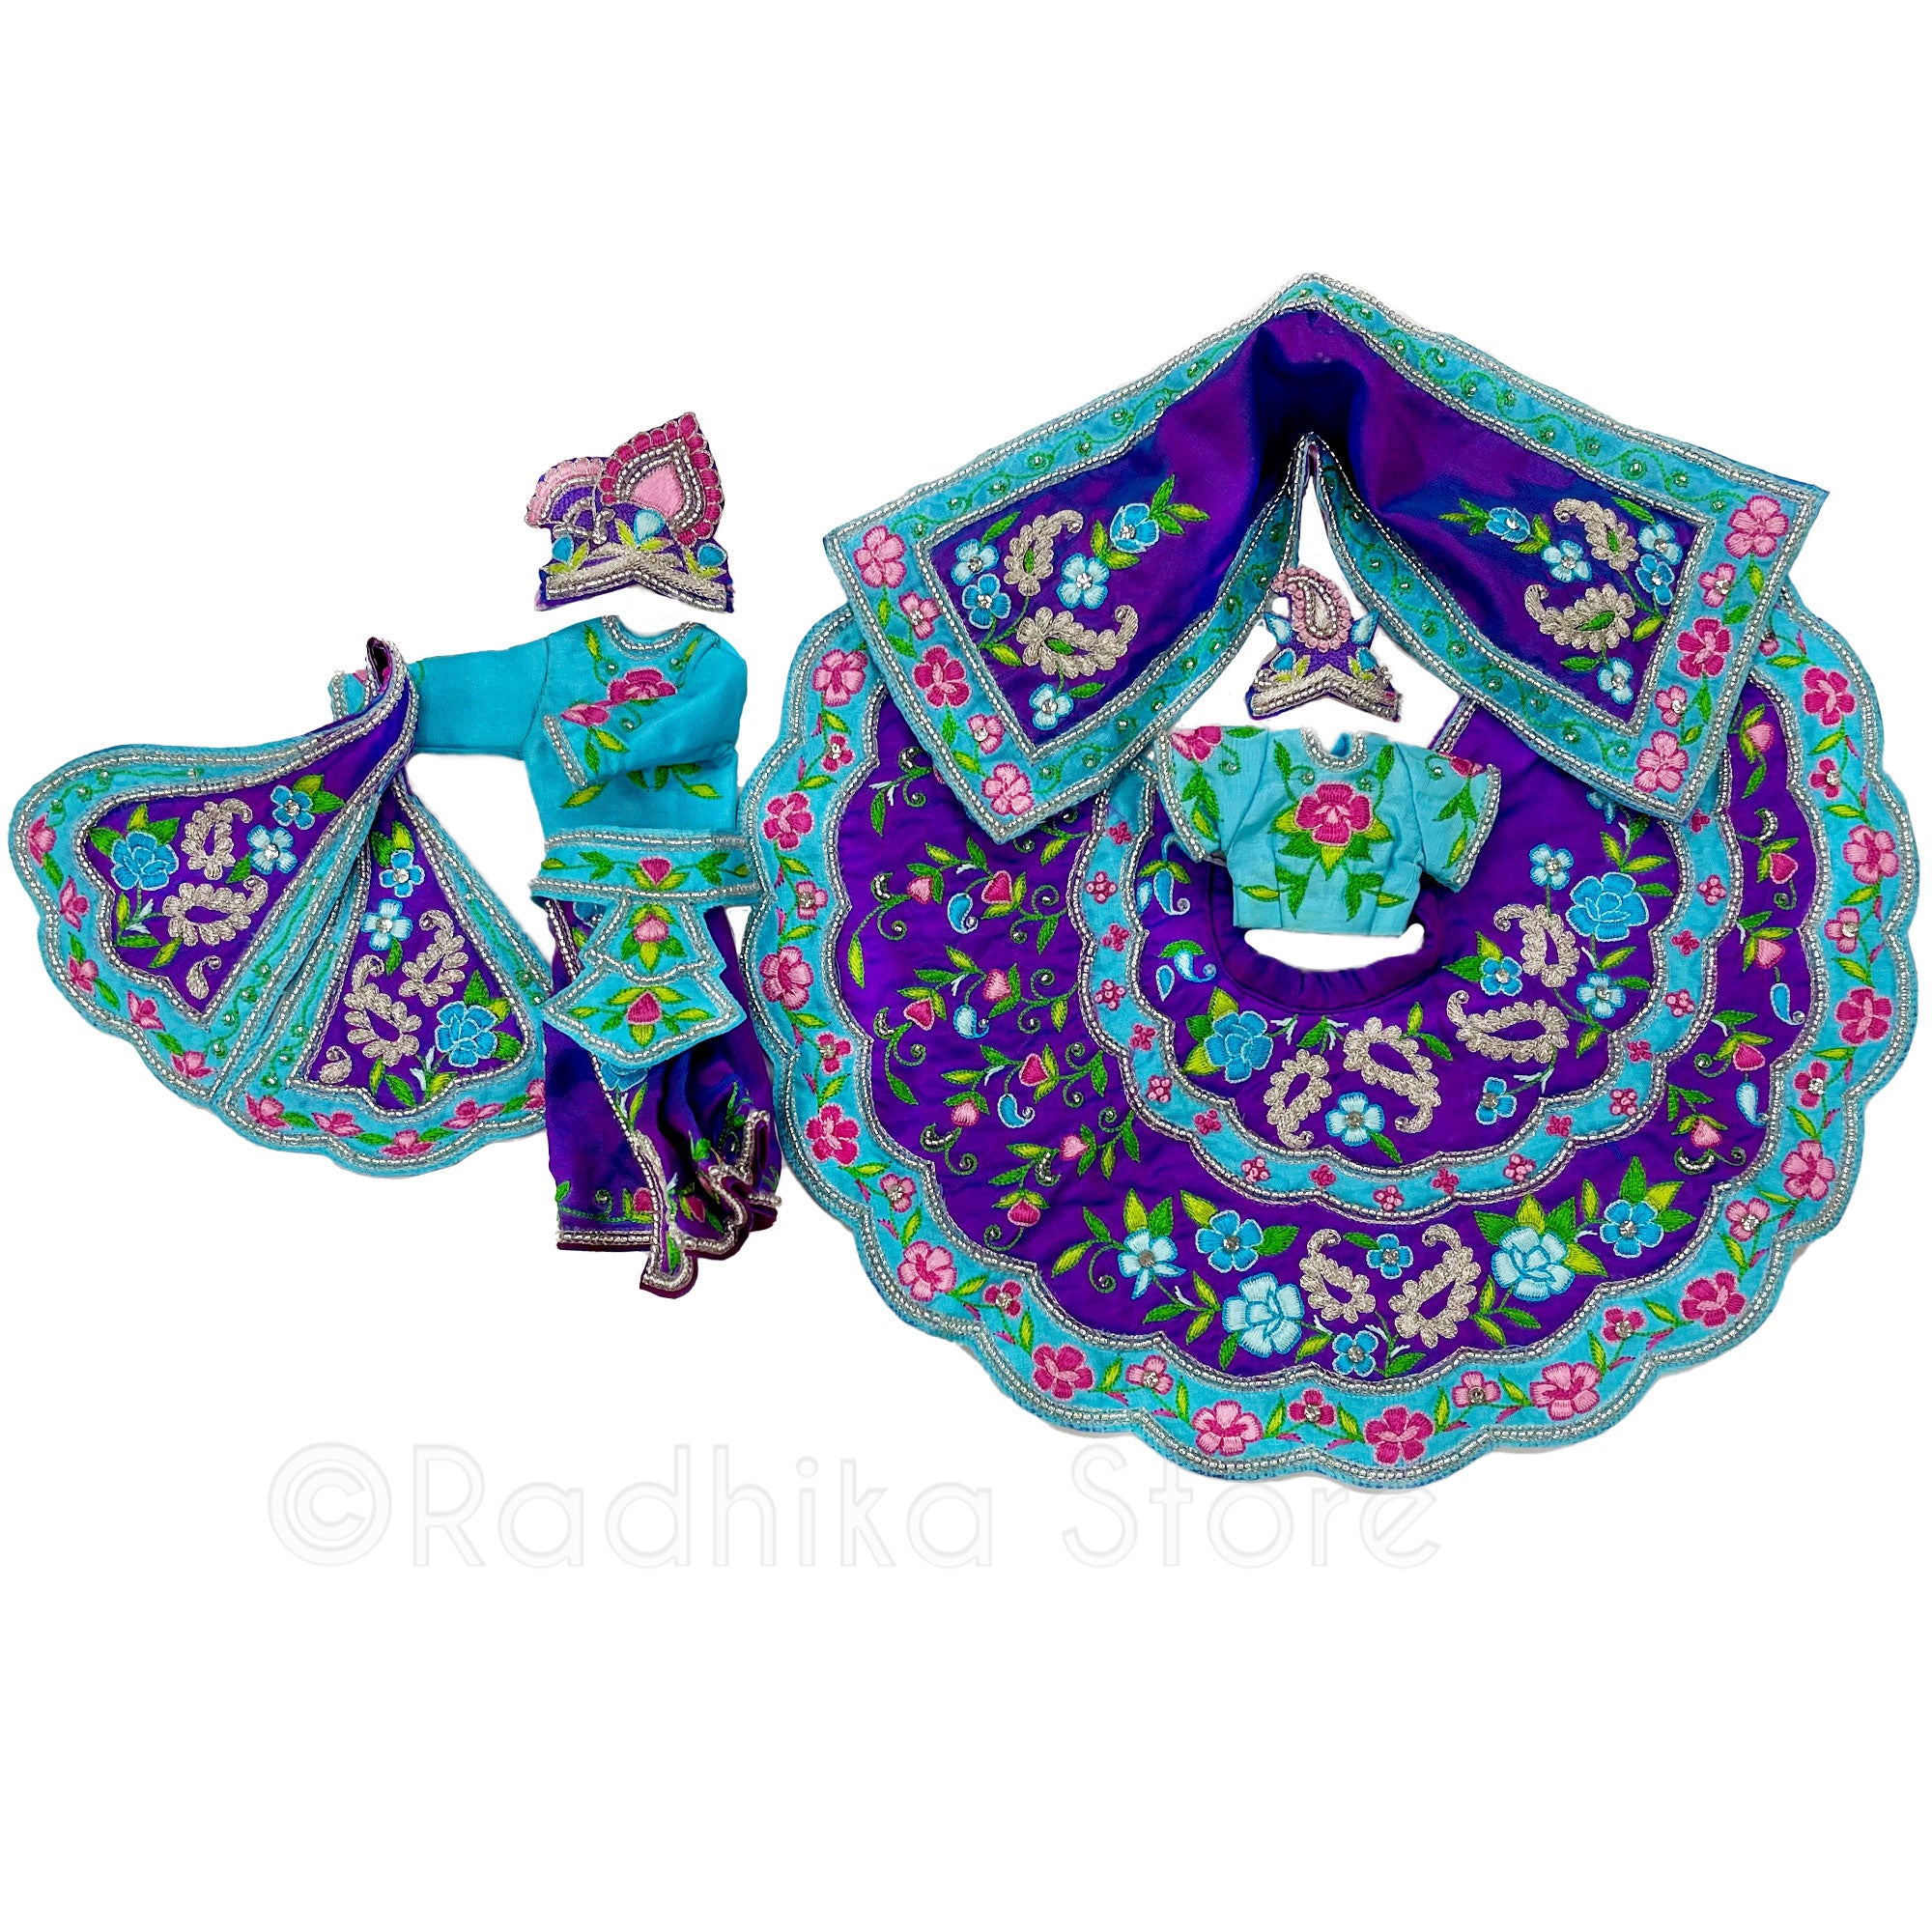 Yamuna River - Silk - Purple and Teal - Radha Krishna Deity Outfit